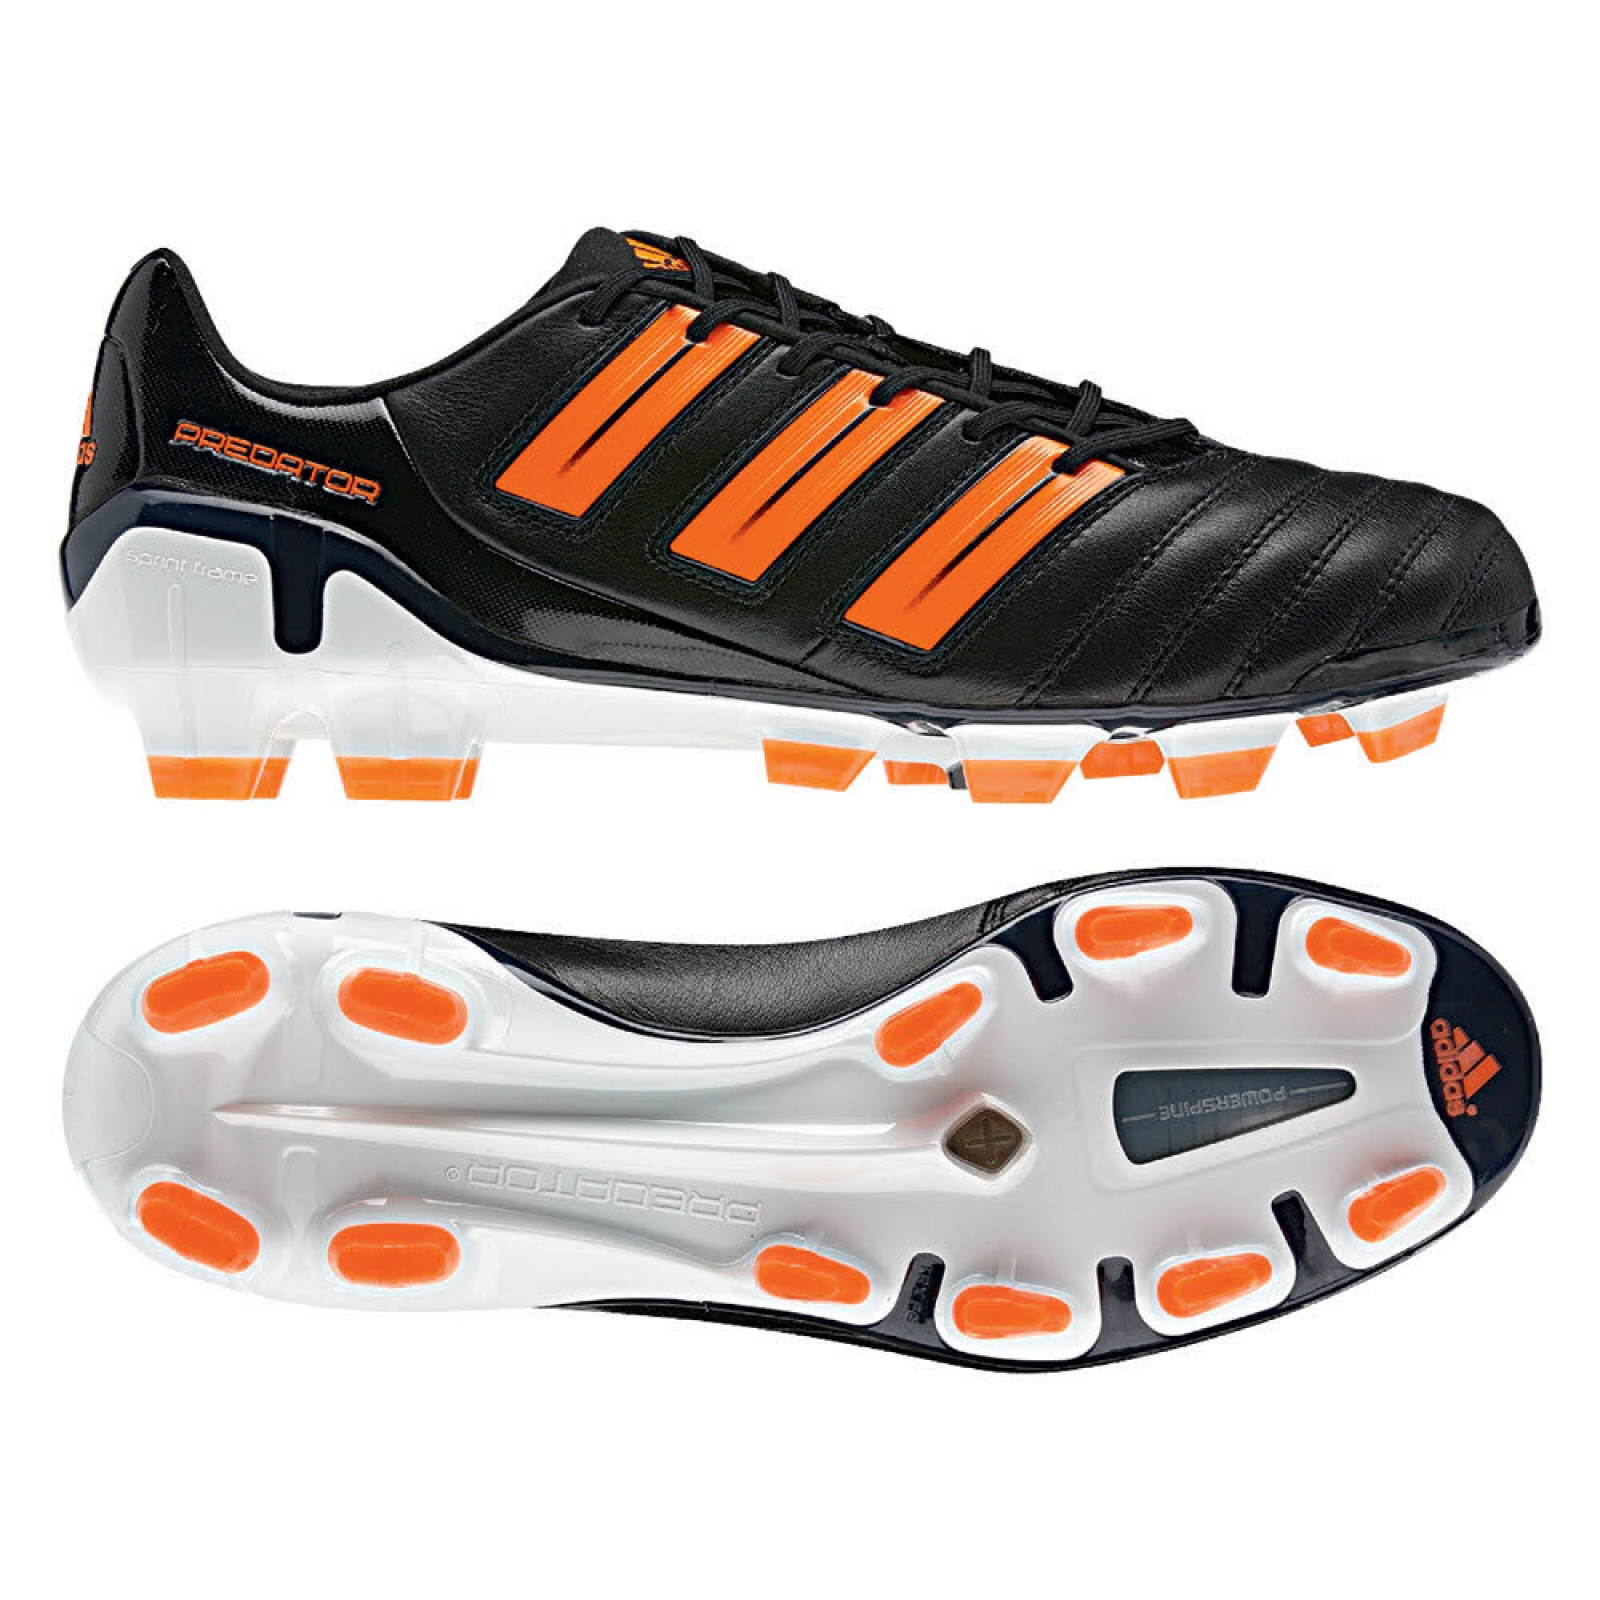 blackout adidas football boots